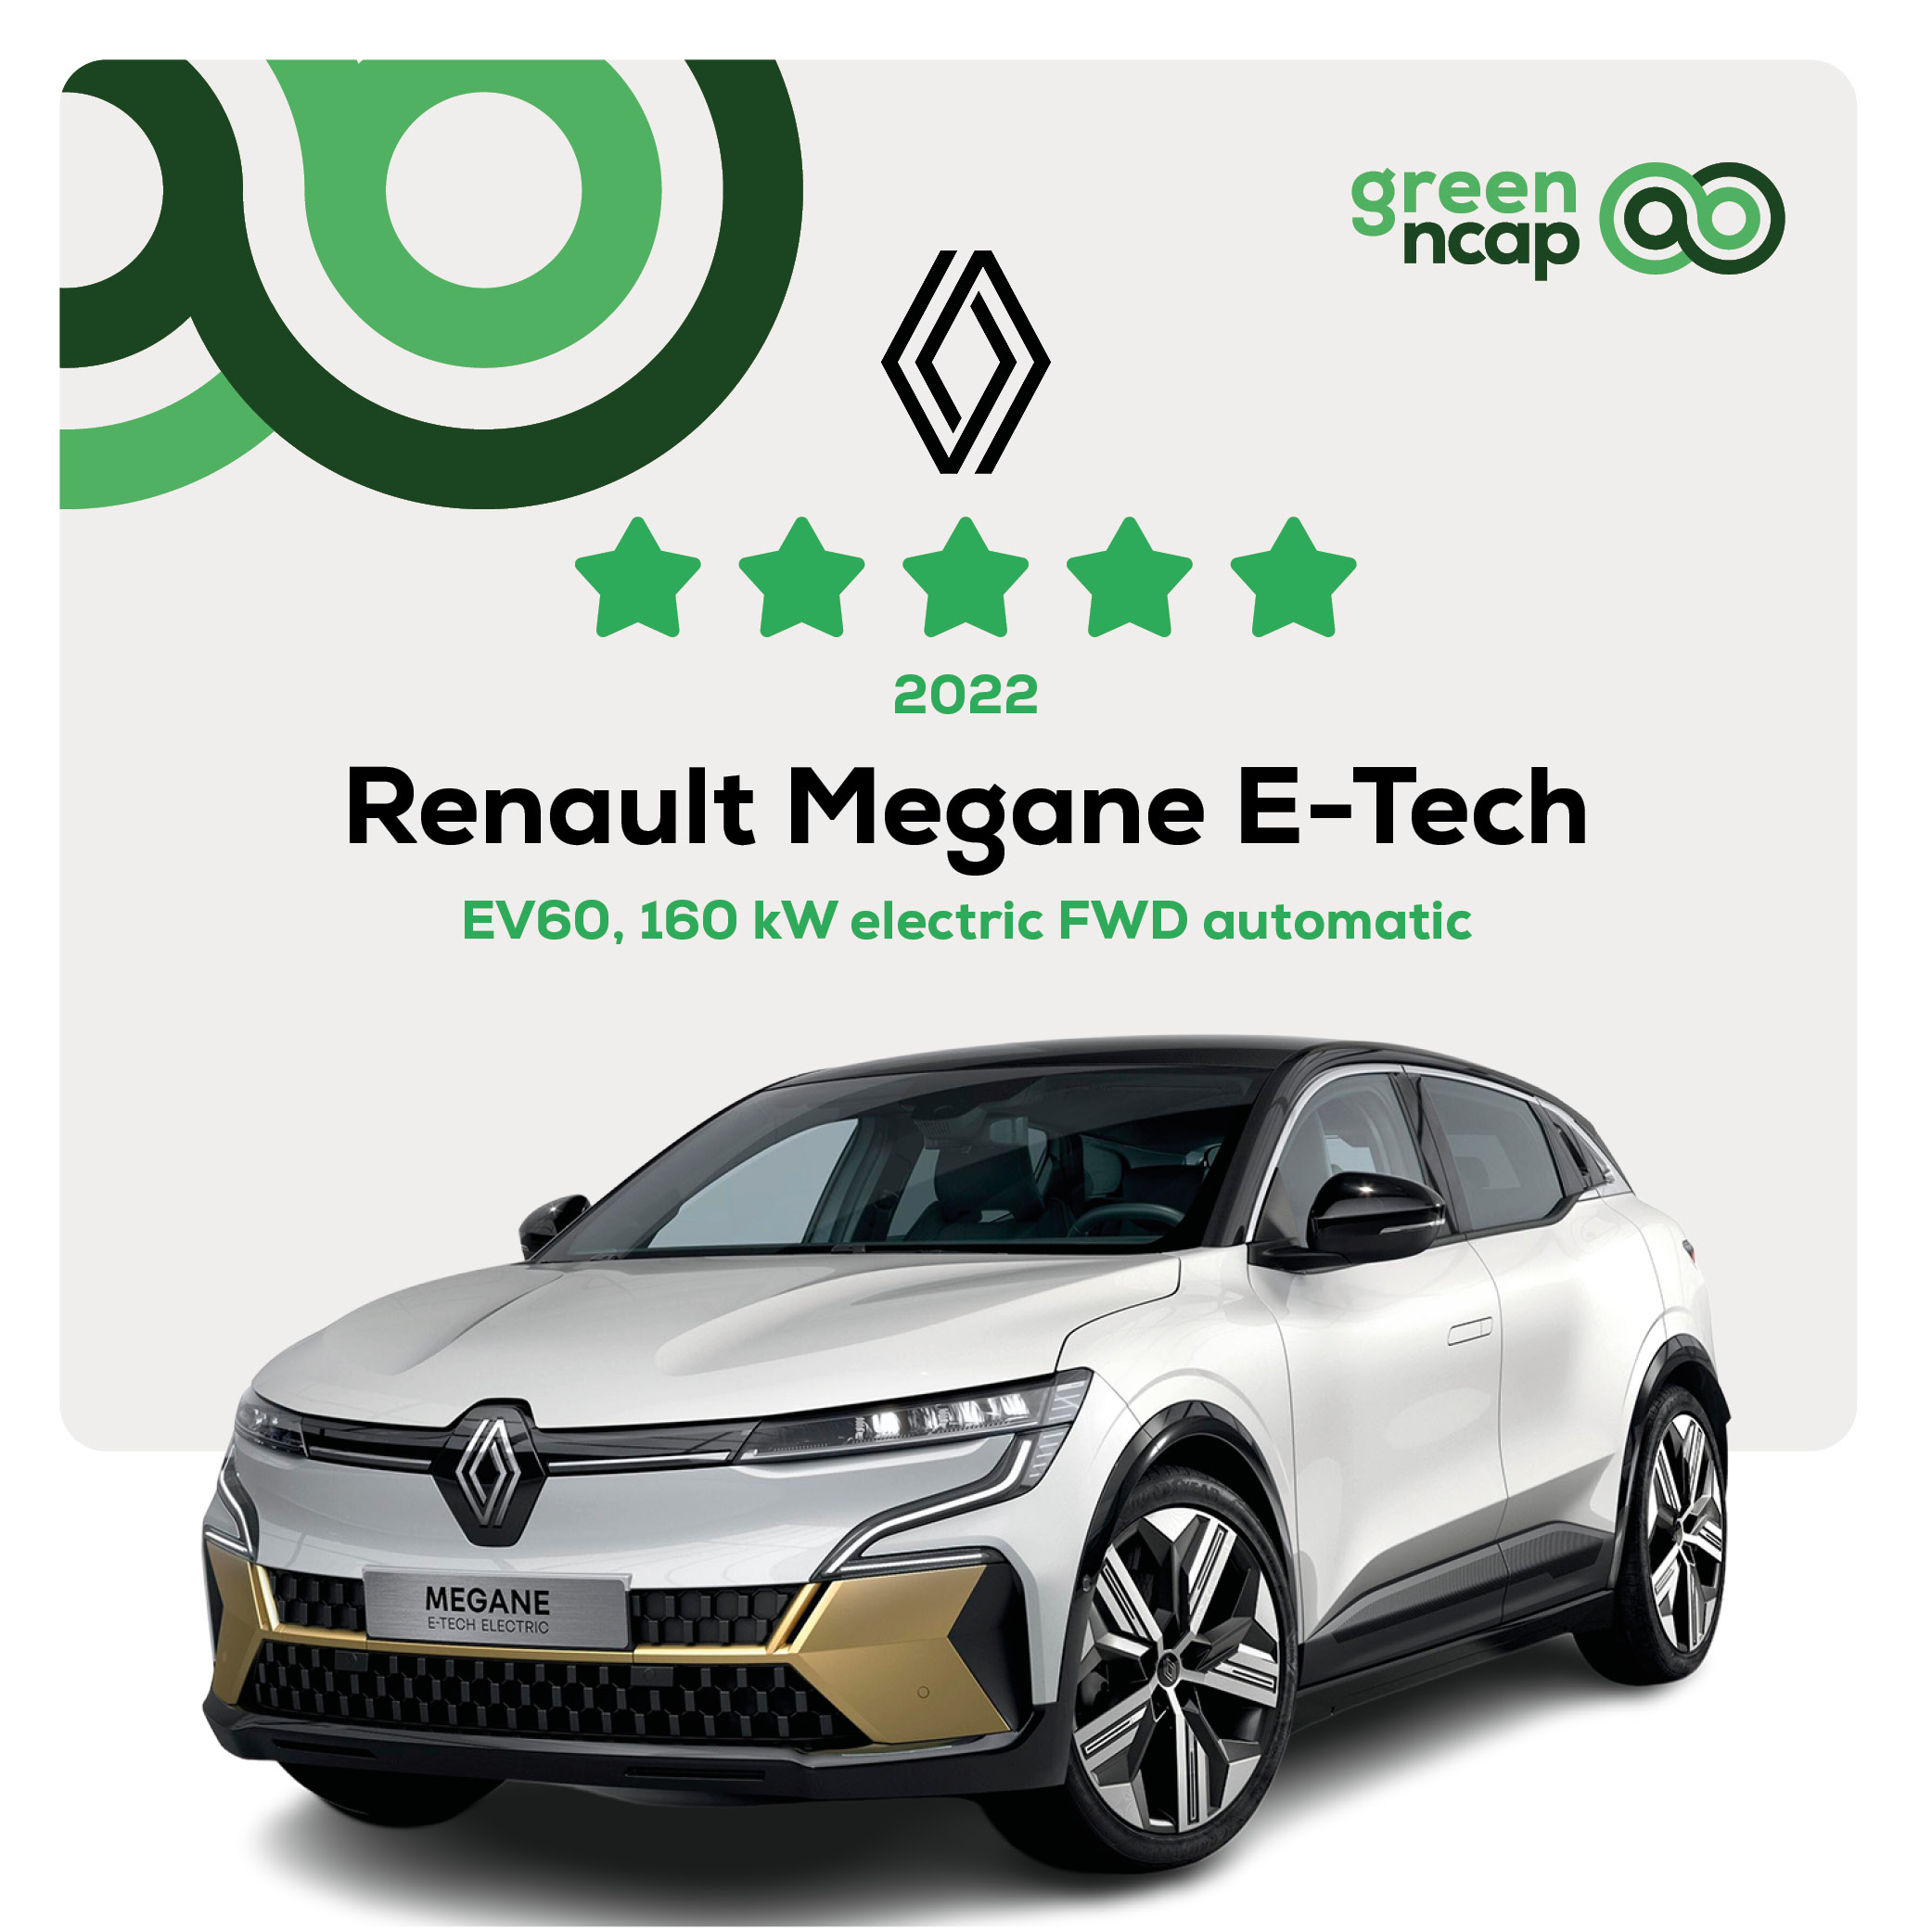 Renault Megane E-Tech - November 2022 Green NCAP results - 5 stars